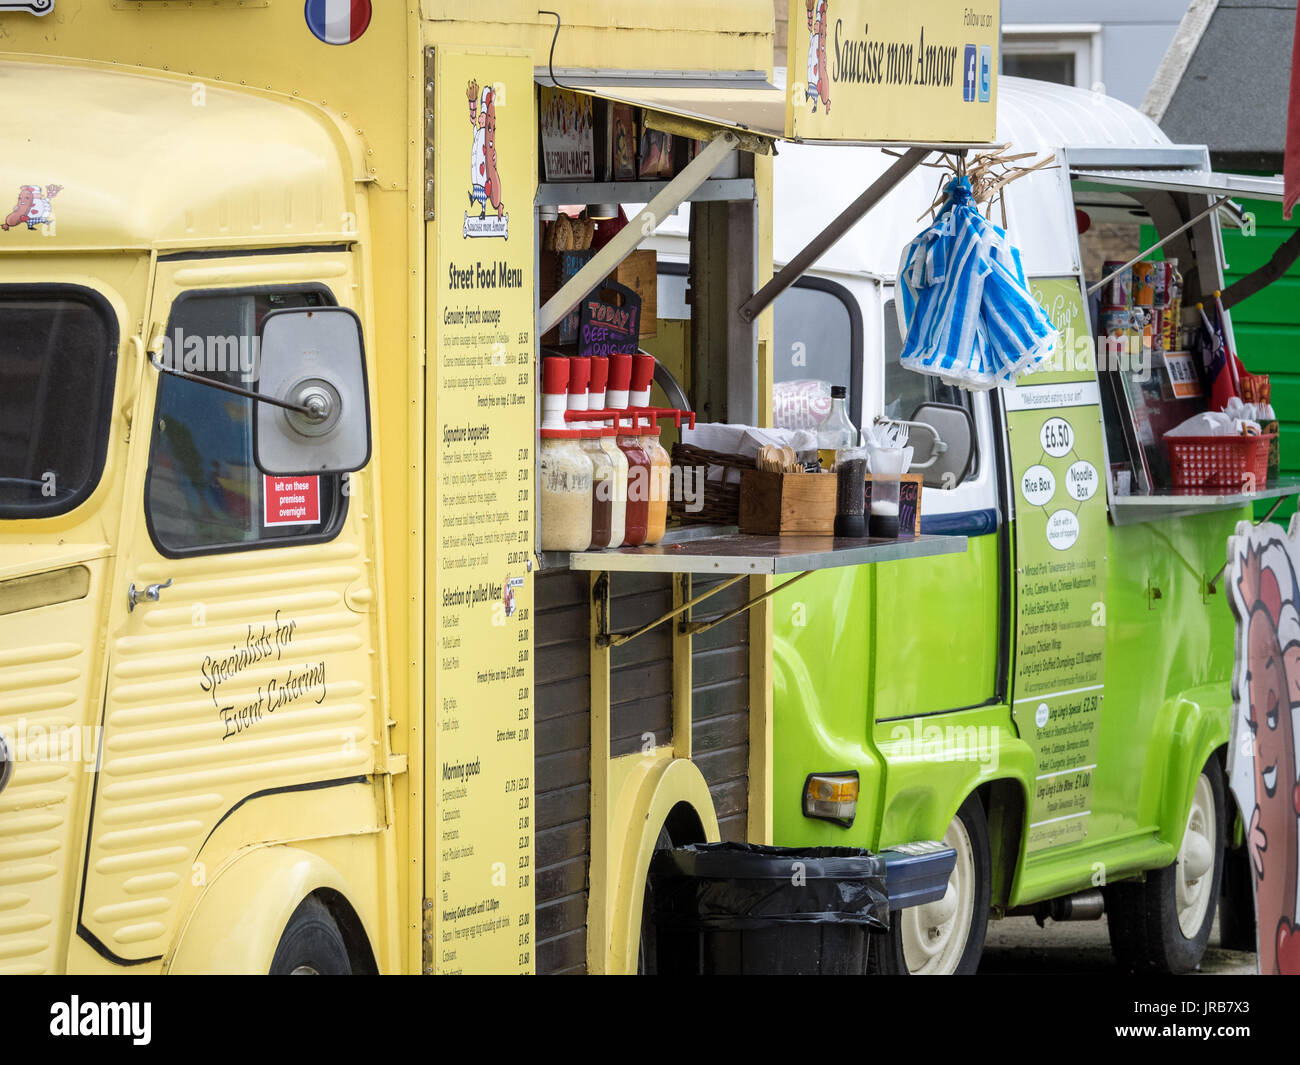 Street Food, Cambridge. Street Food vans near Cambridge Station, UK. Stock Photo